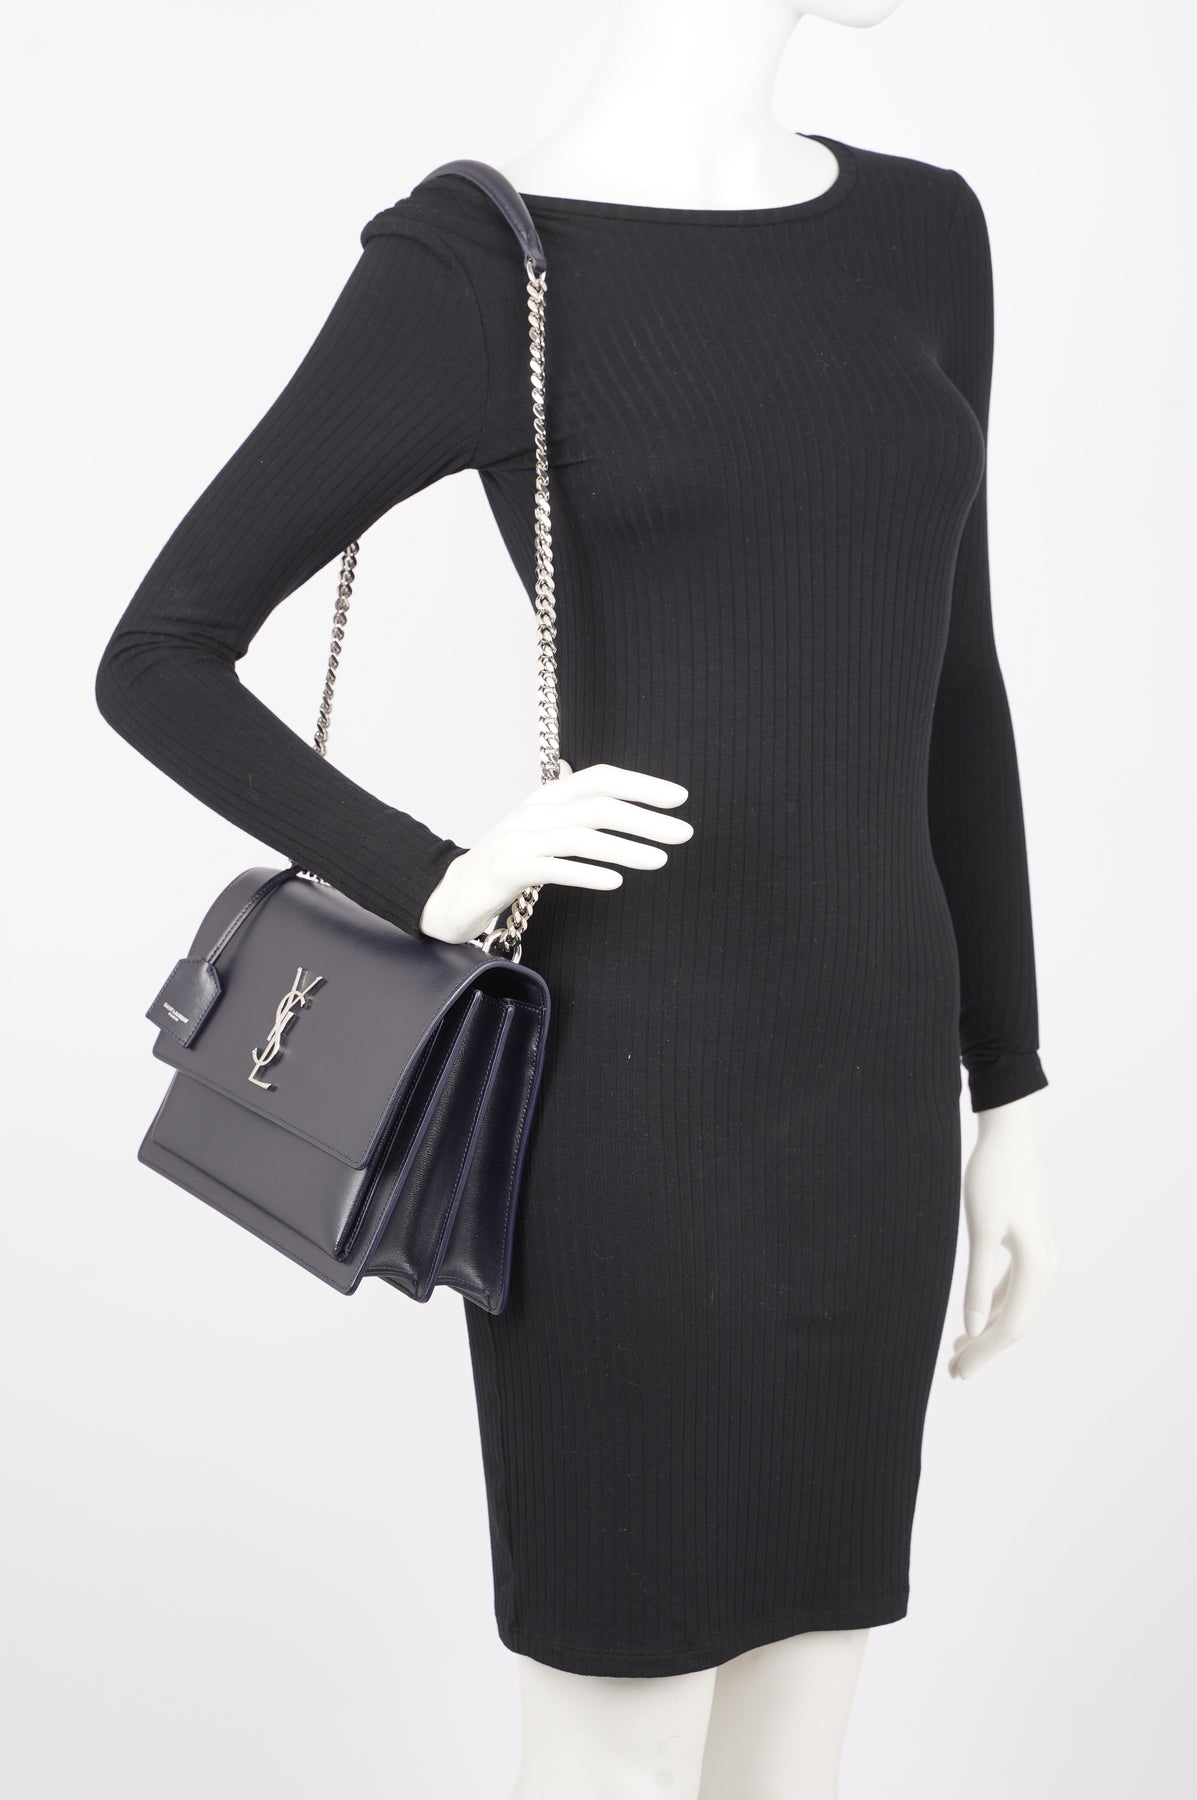 Saint Laurent top handle sunset bag mini and medium #fashion #love